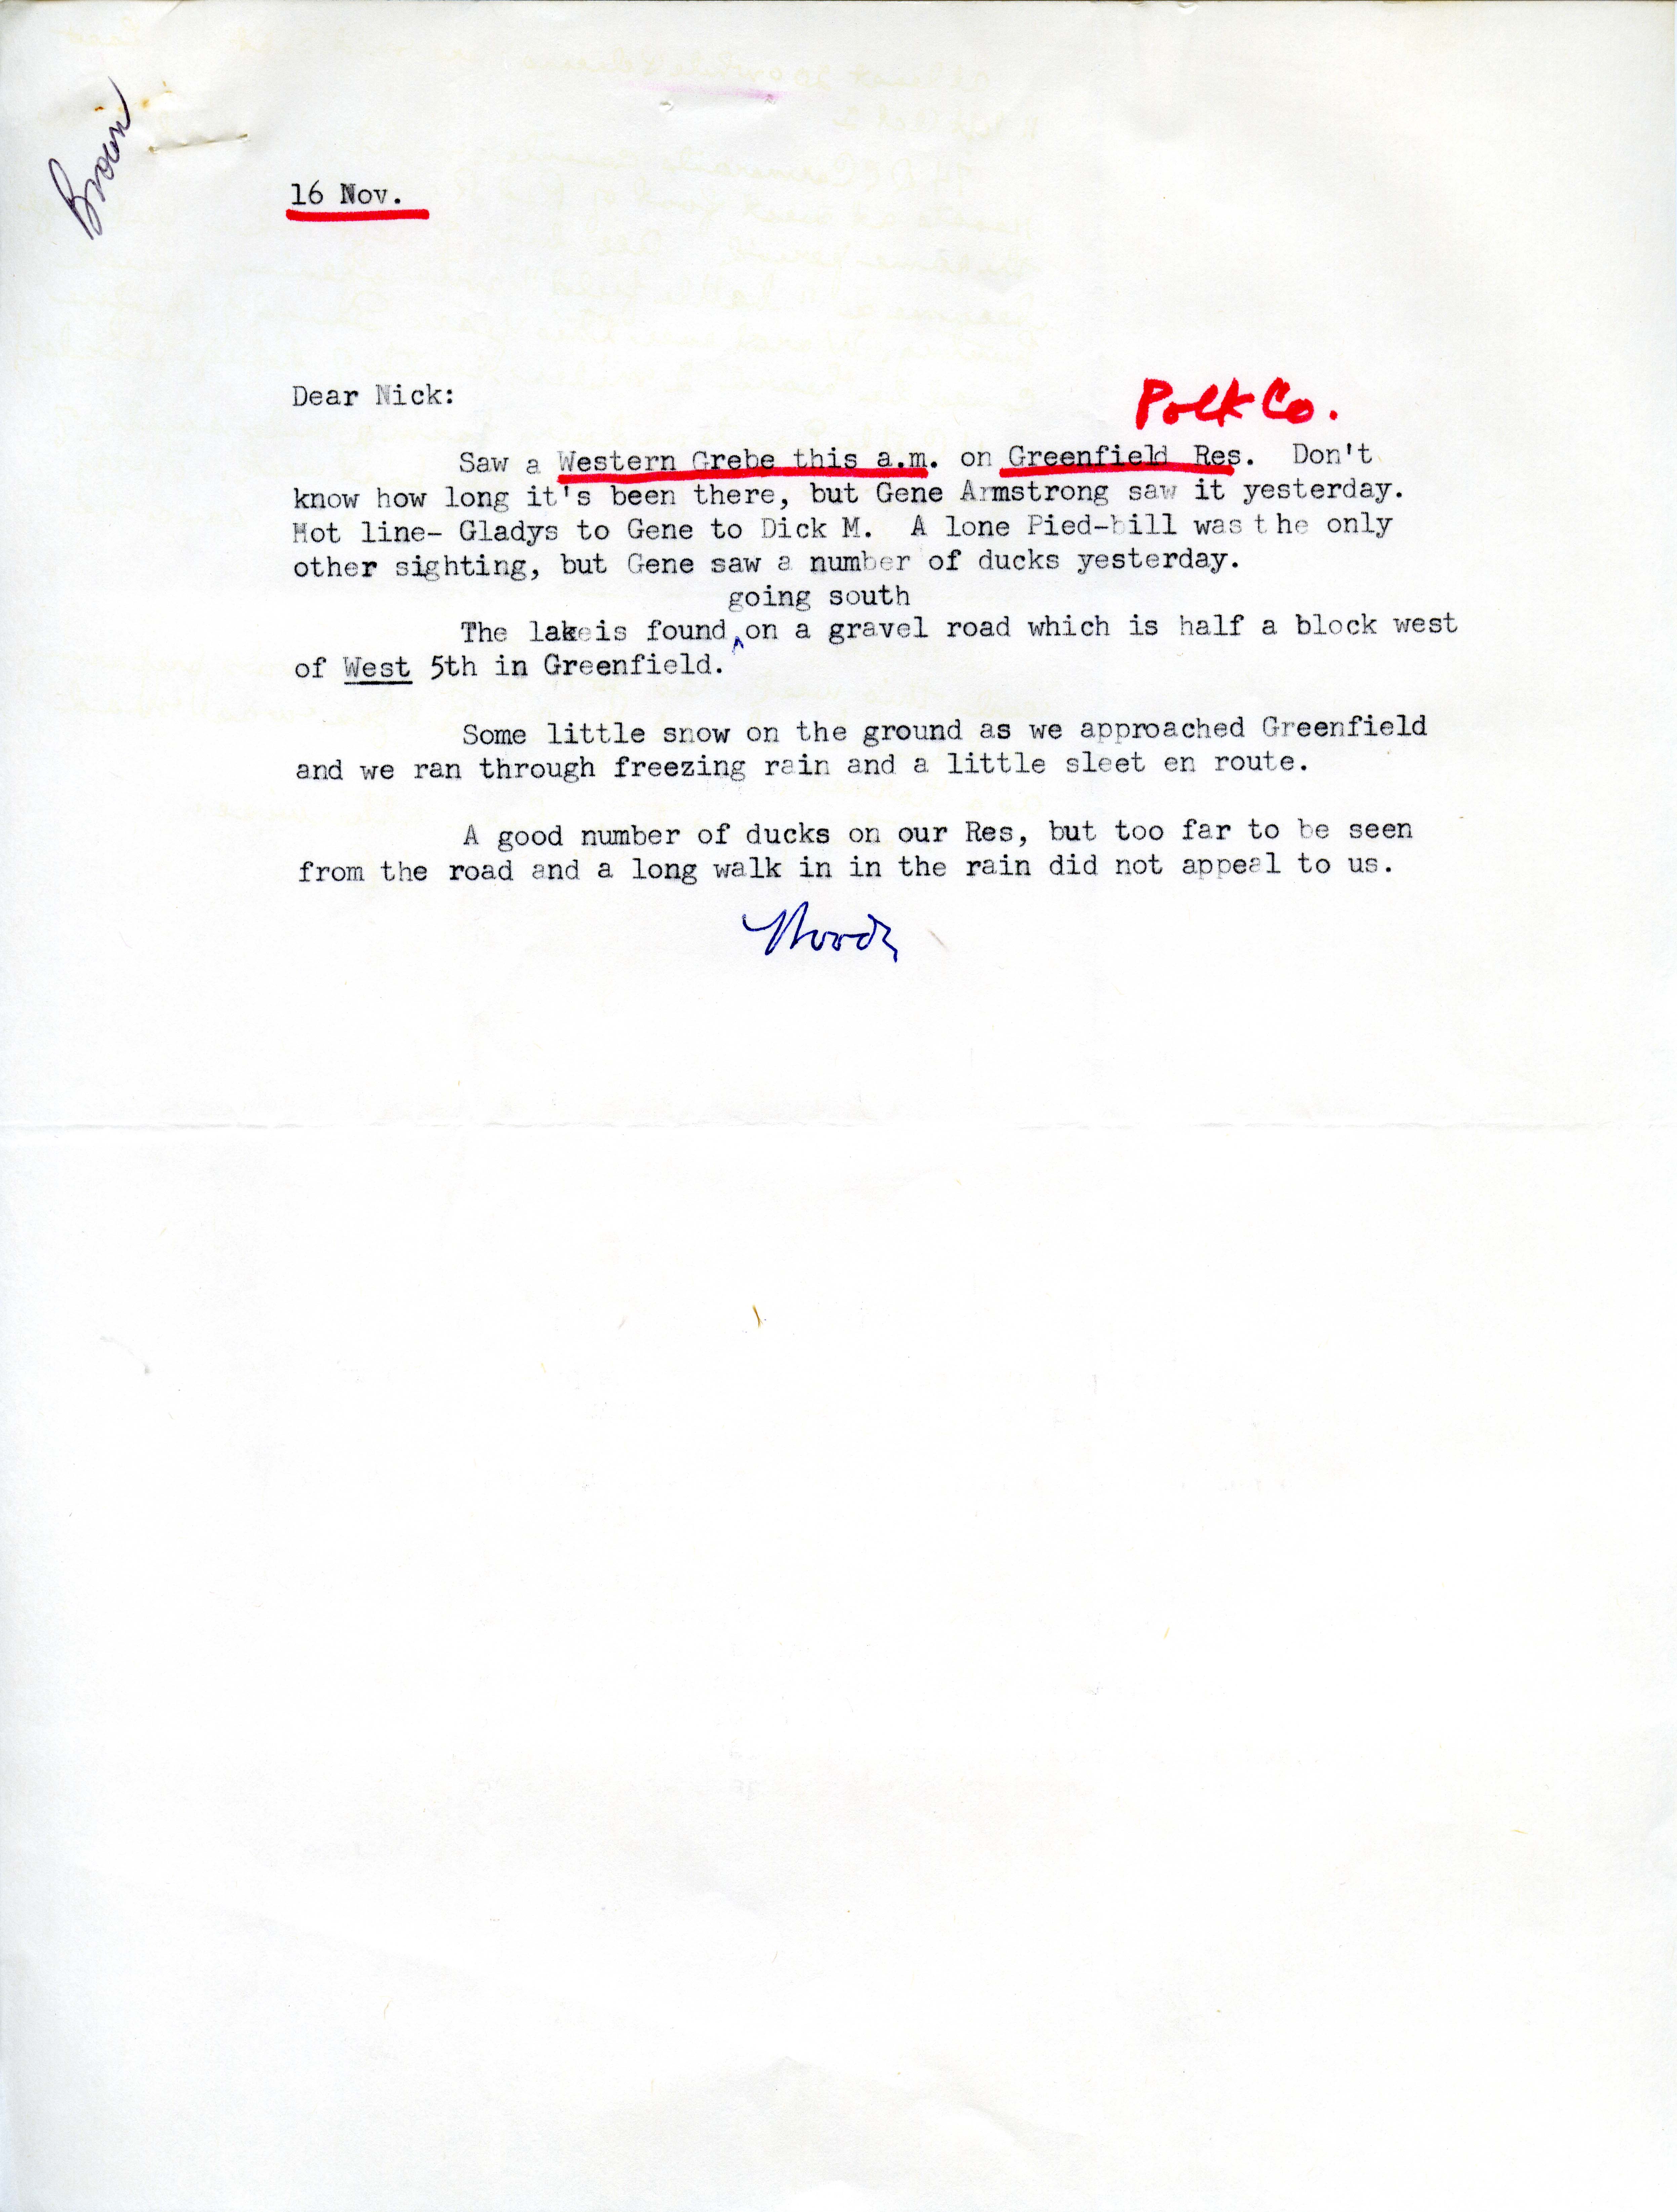 Woodward H. Brown letter to Nicholas S. Halmi regarding bird sightings, November 16, 1978